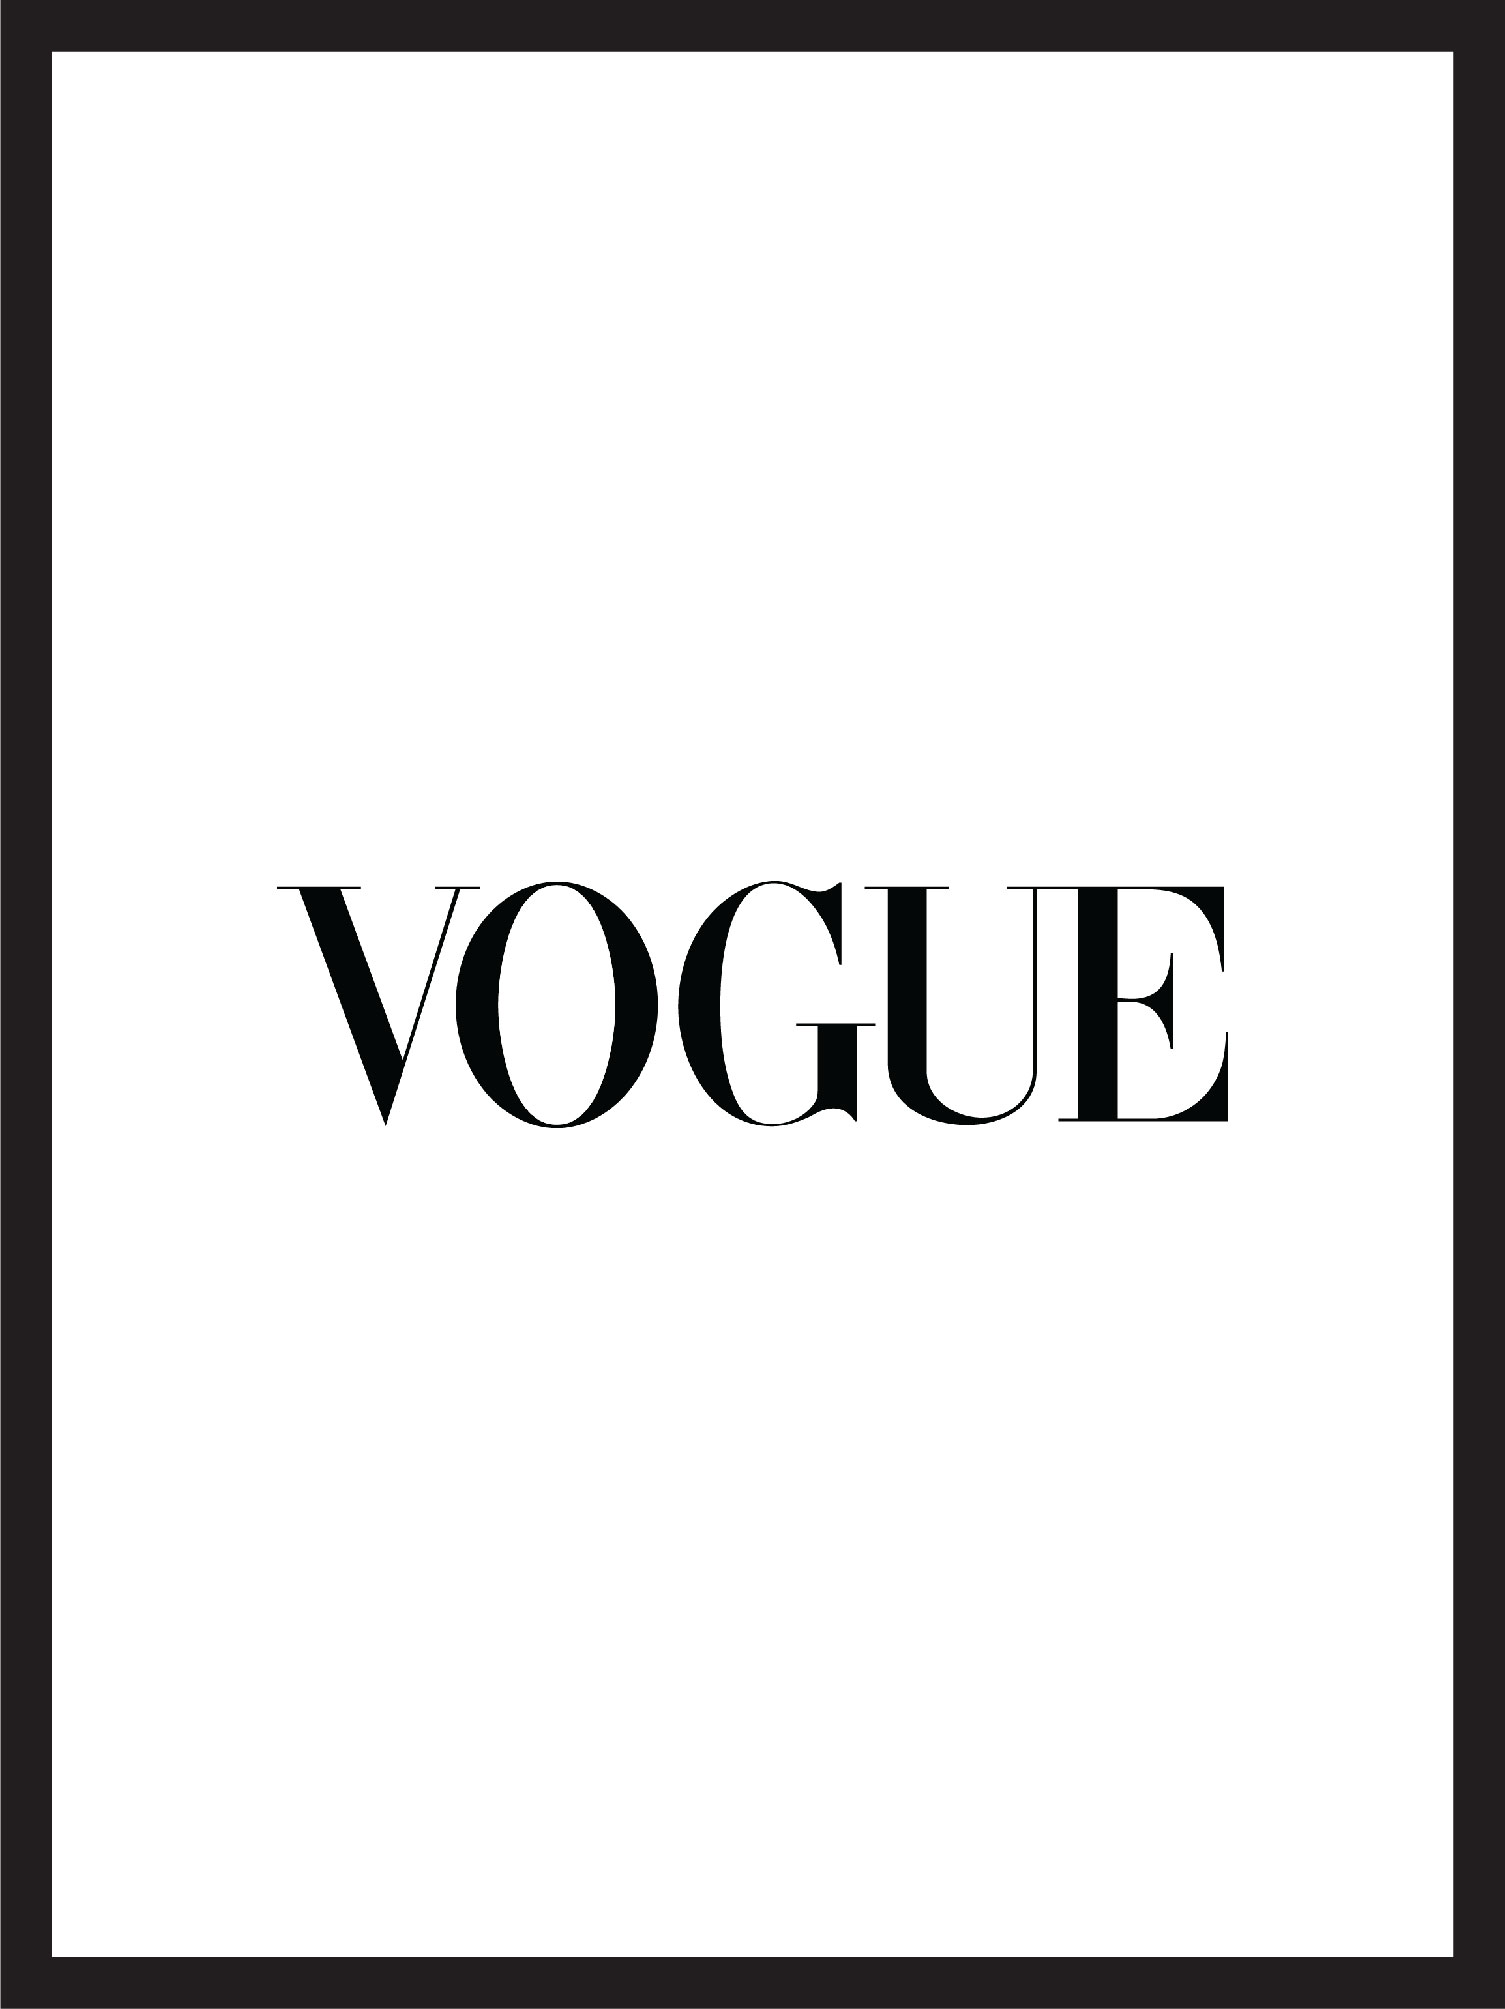 logo of the magazine vogue